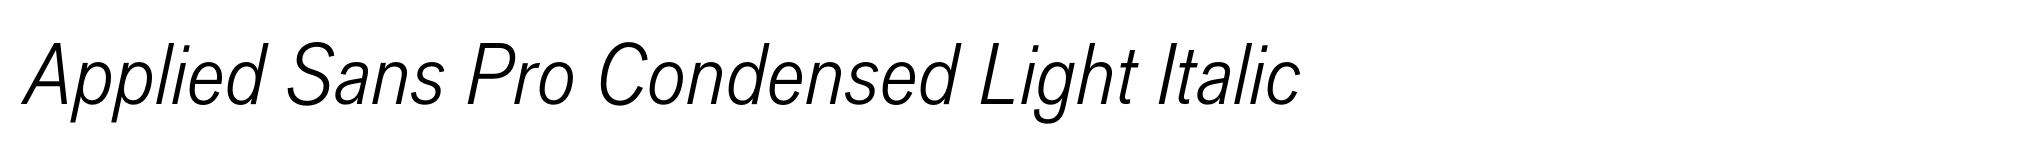 Applied Sans Pro Condensed Light Italic image